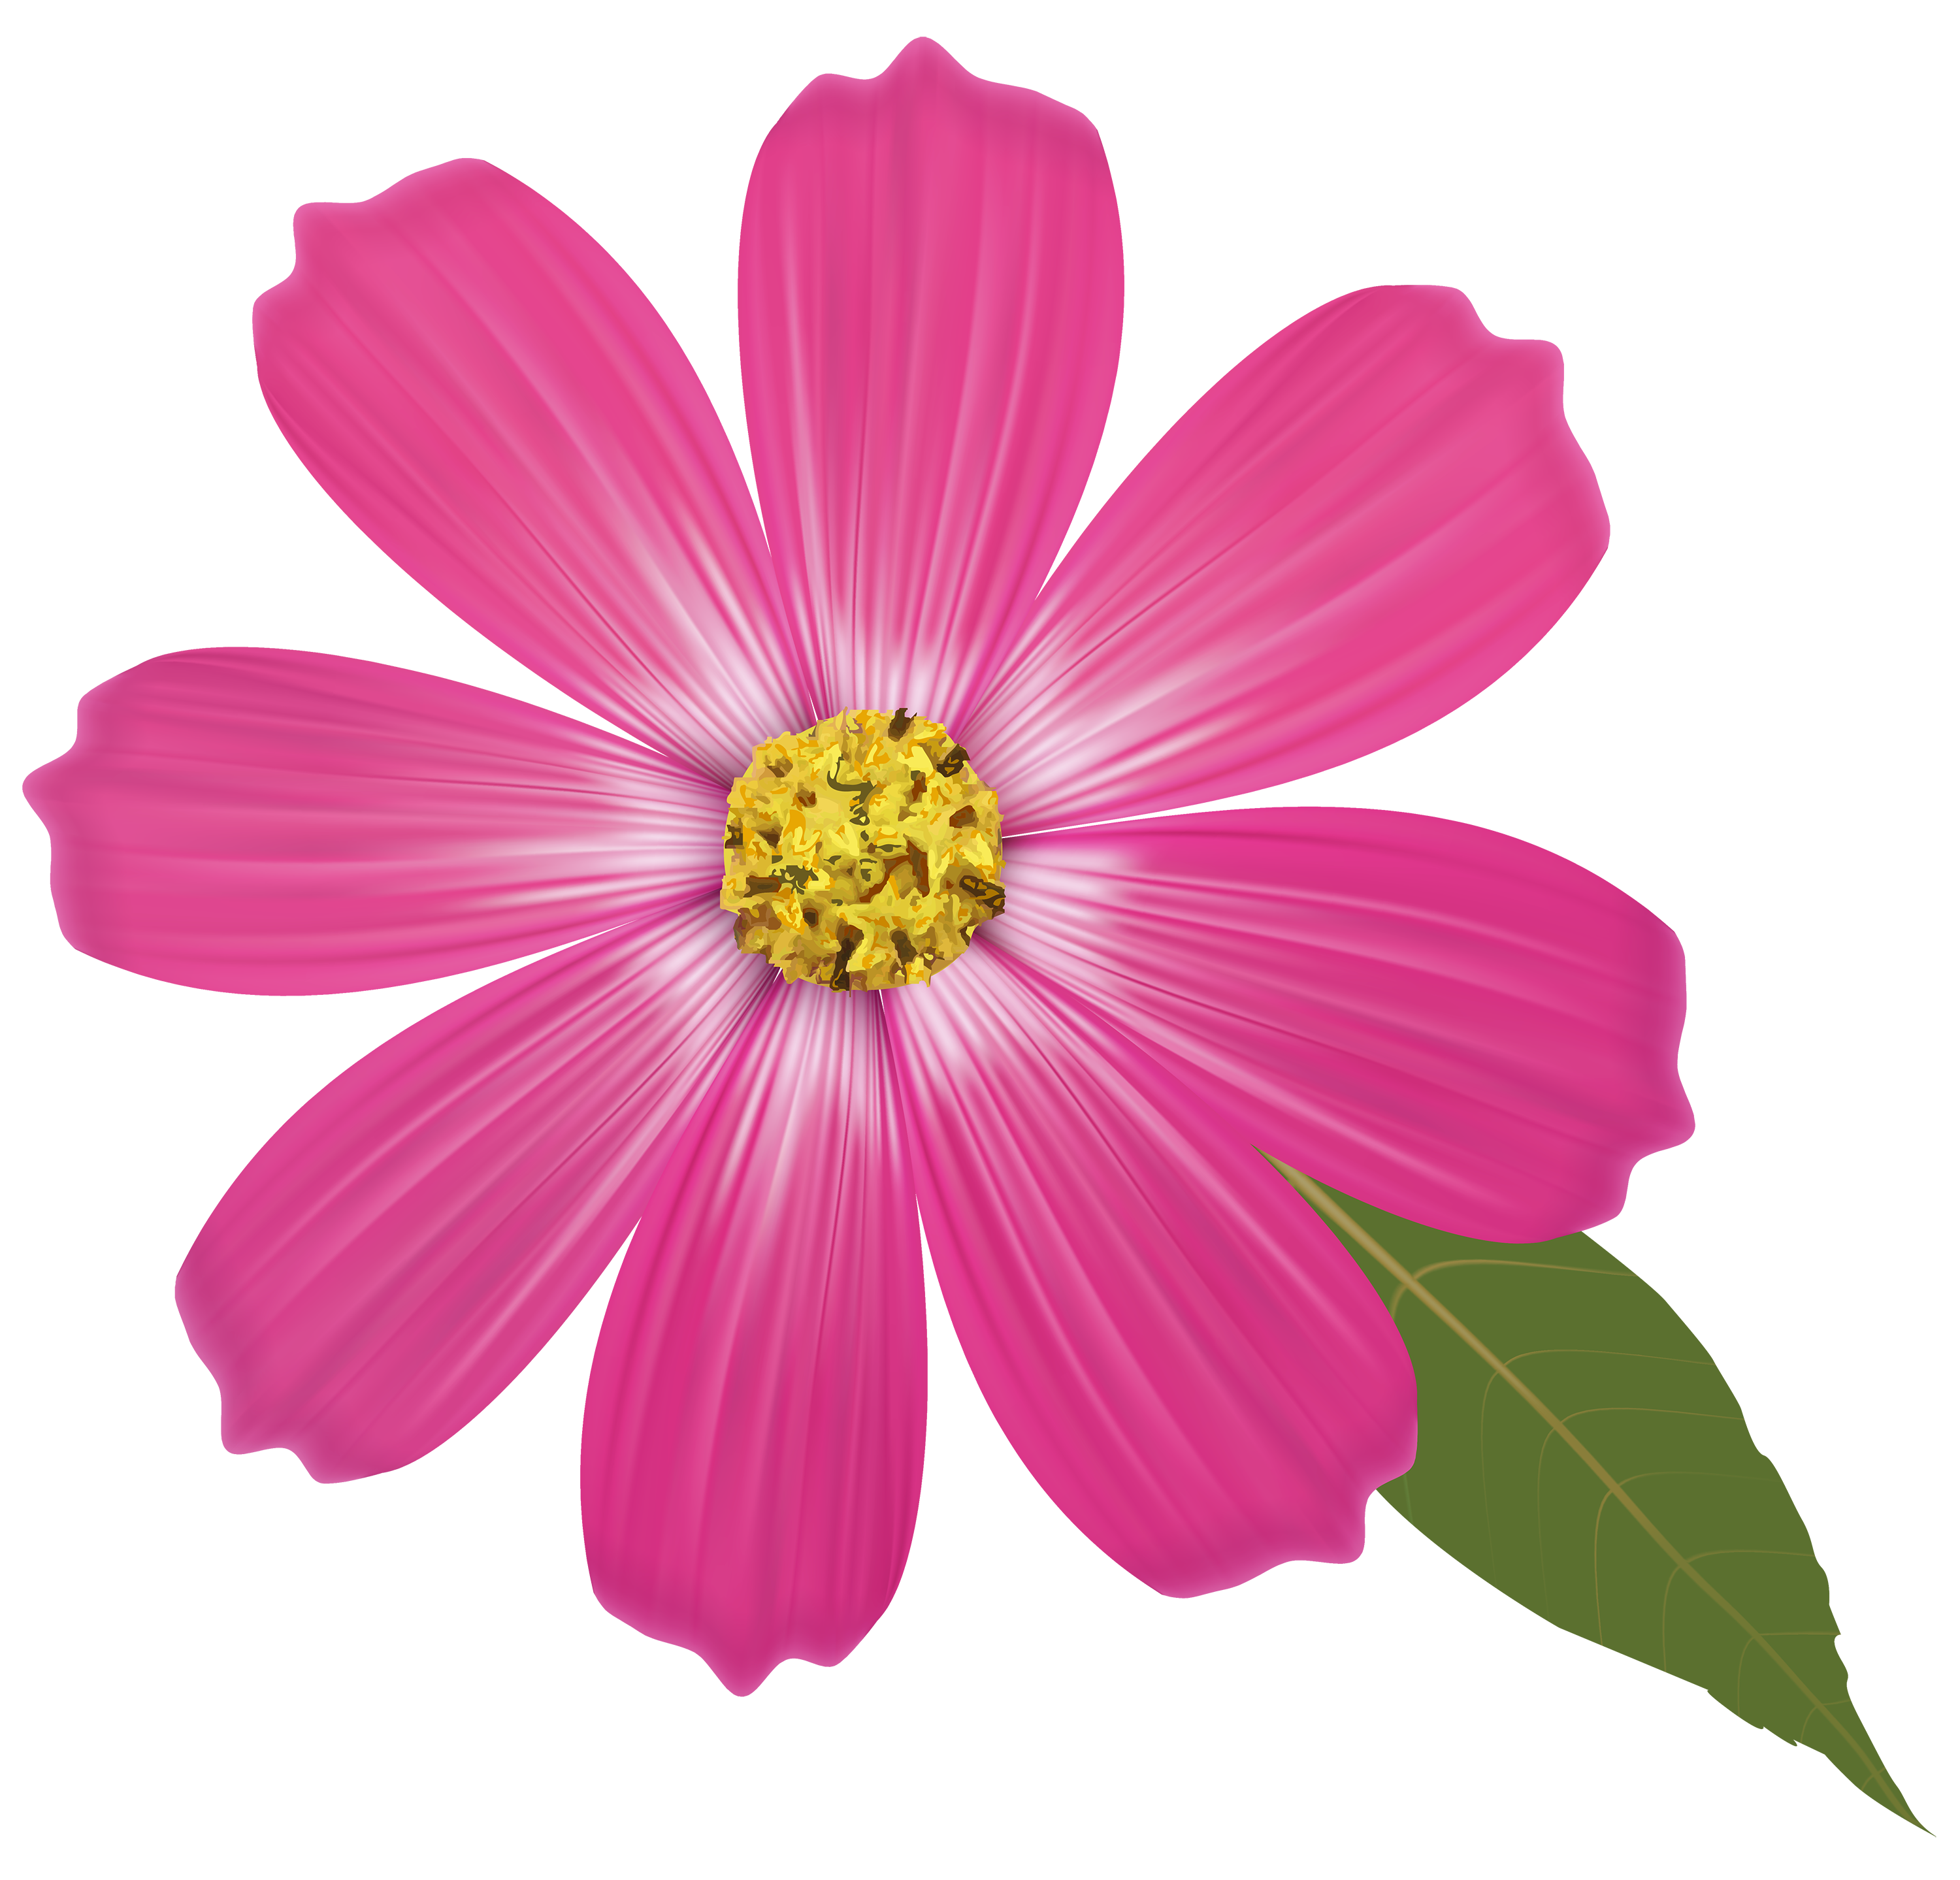 Pink Flower PNG Clipart - Best WEB Clipart